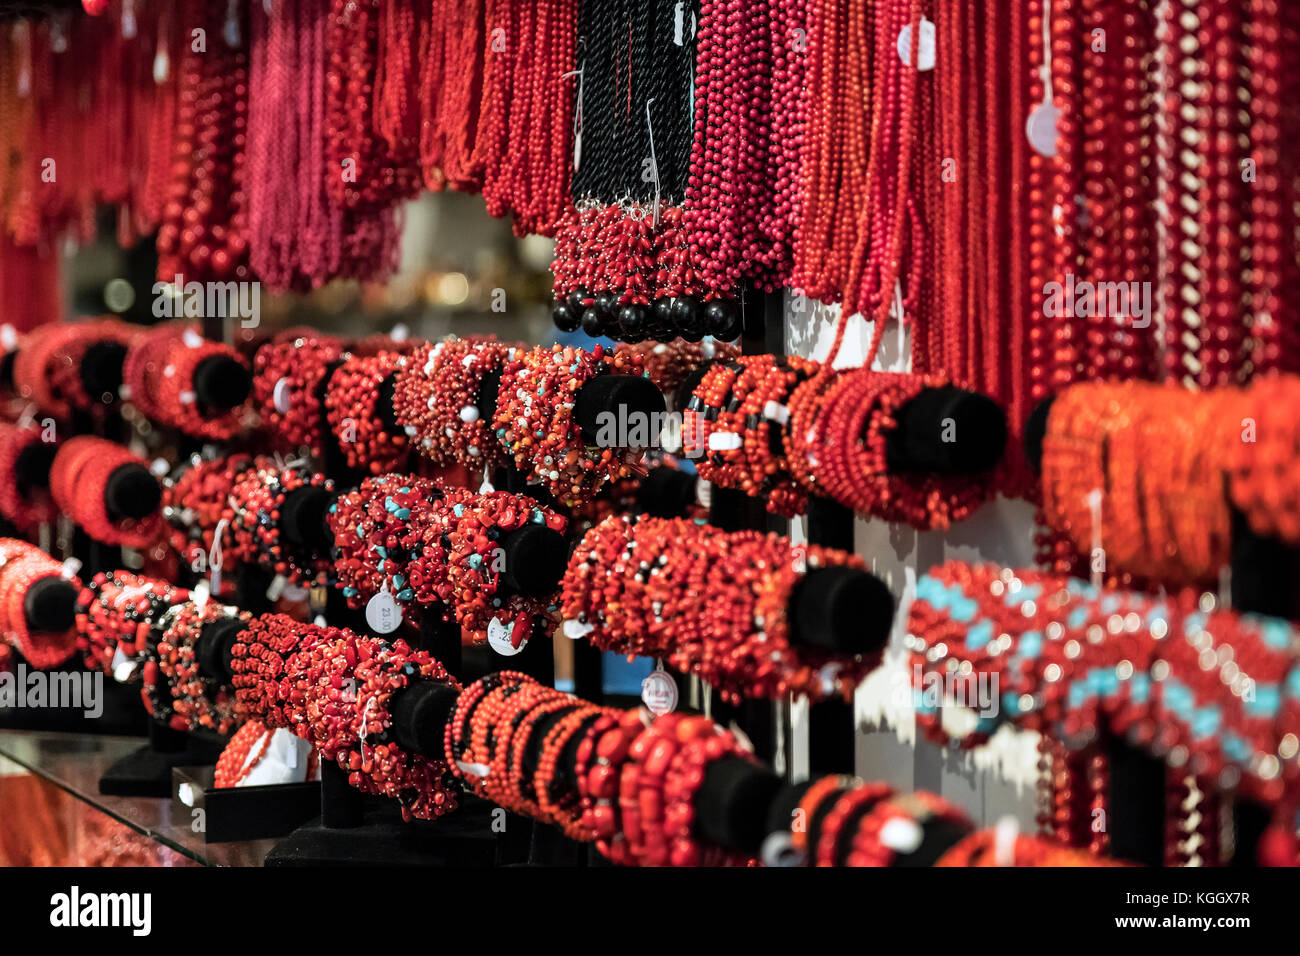 Red coral jewelry on display, Alghero, Sardinia, Italy. Stock Photo